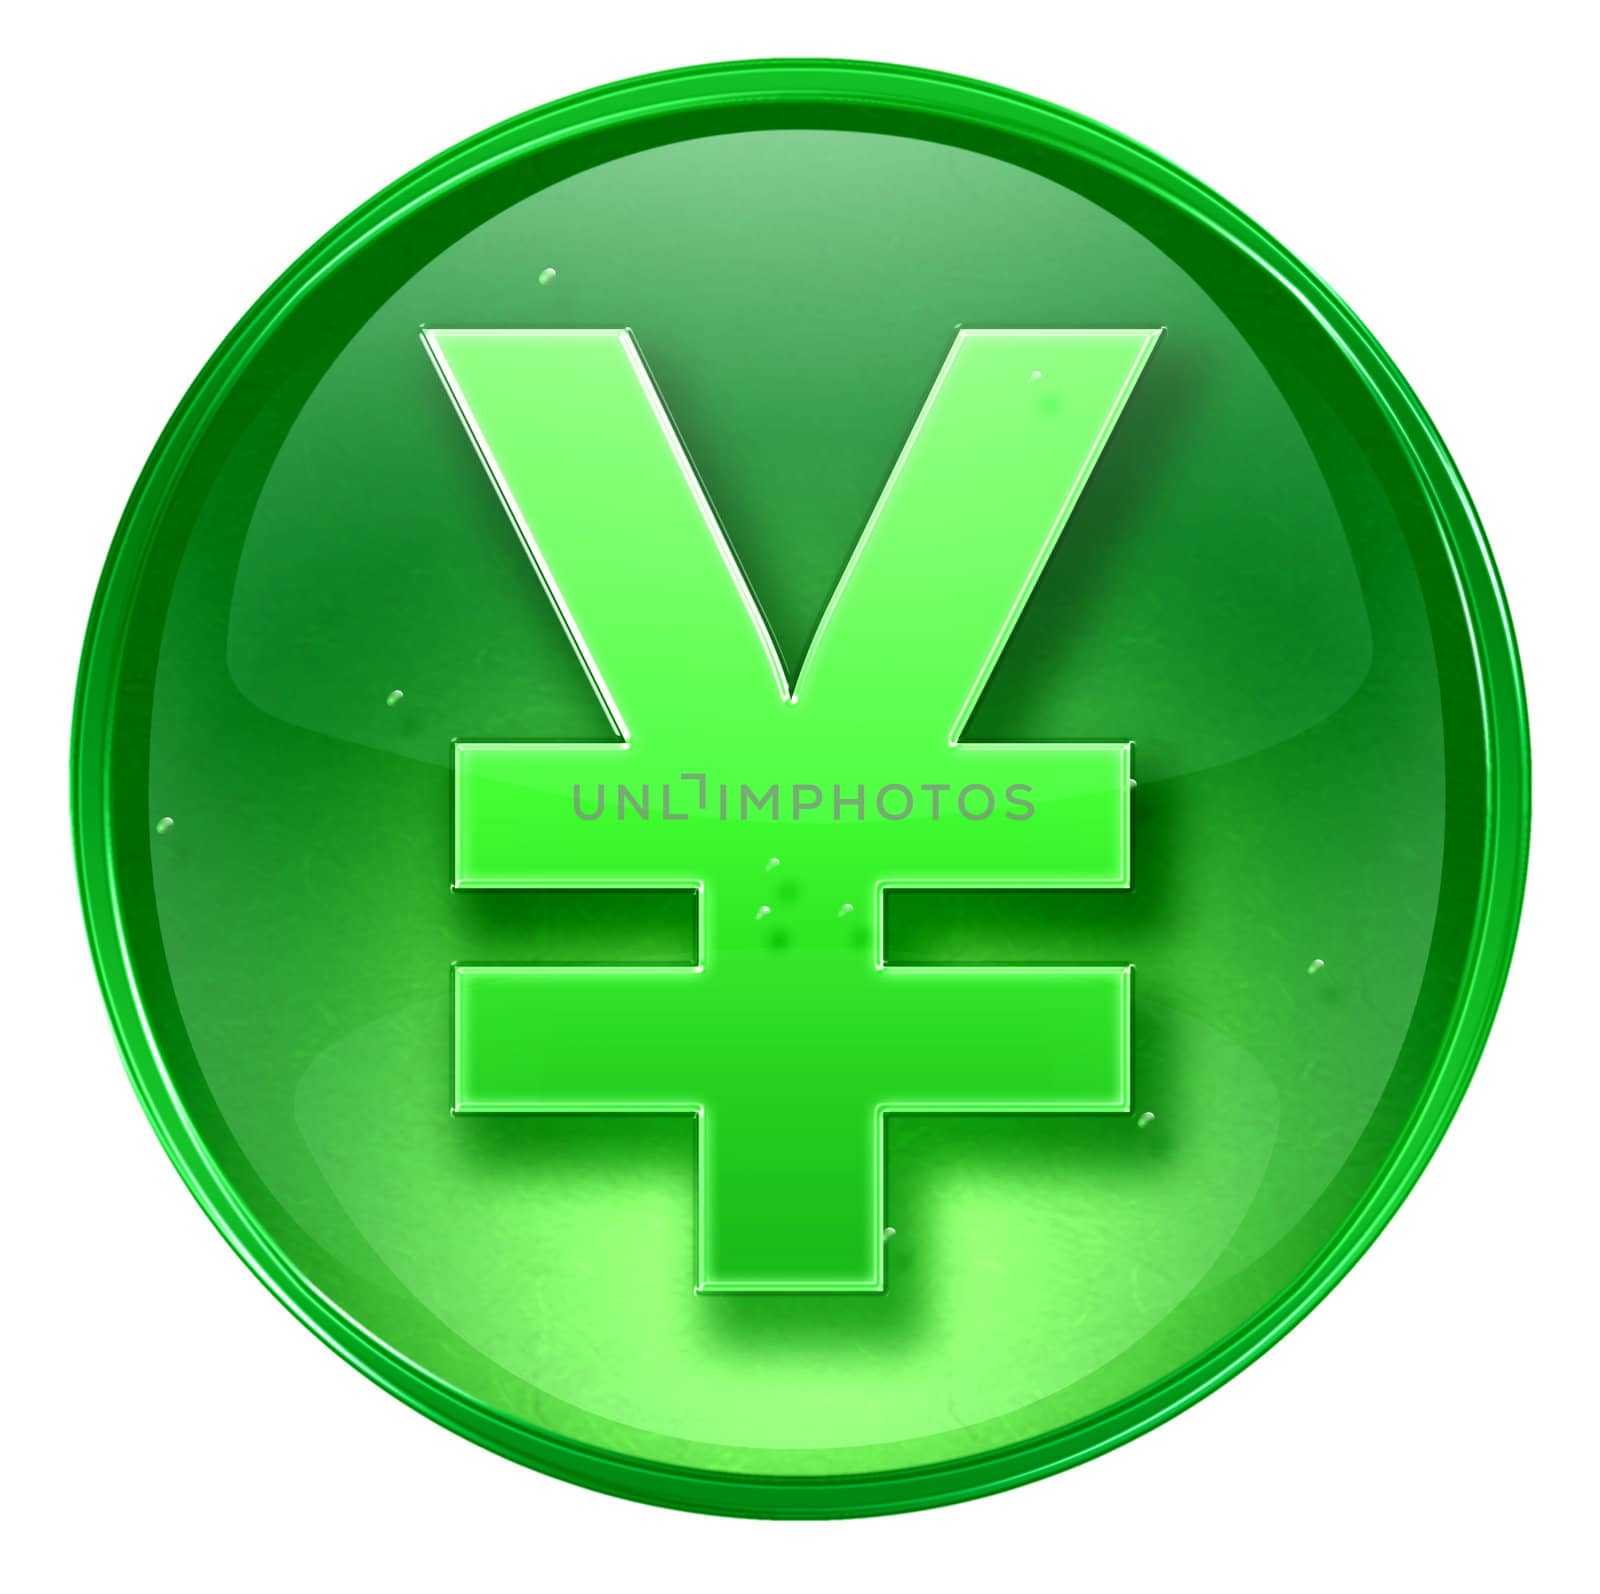 Yen icon green, isolated on white background